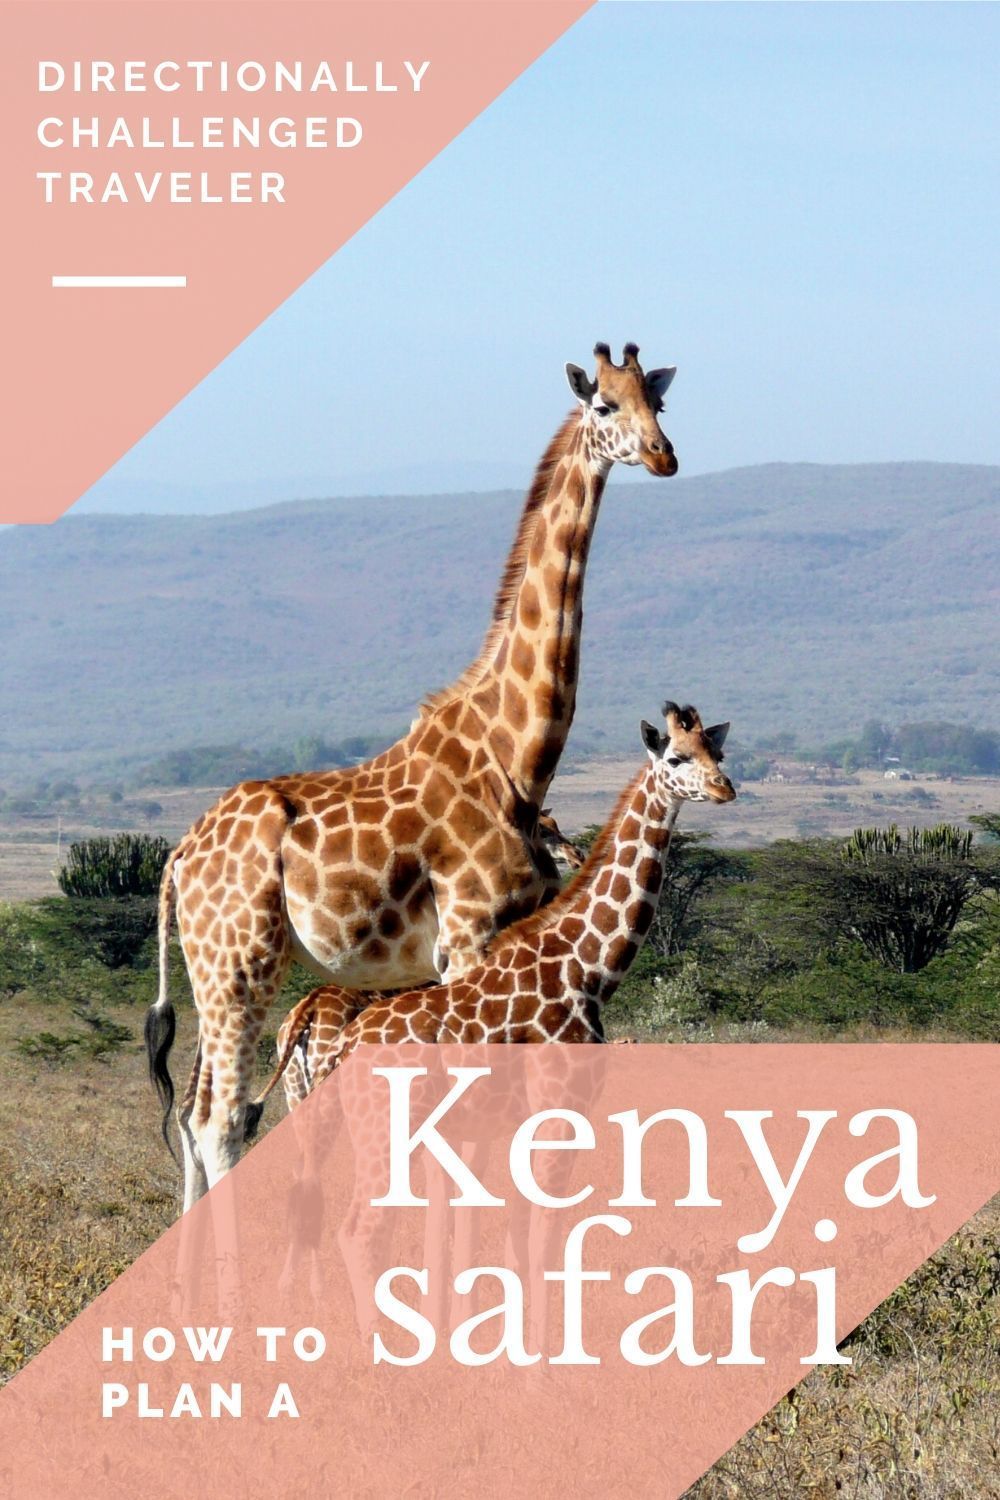 18 travel destinations Africa adventure ideas